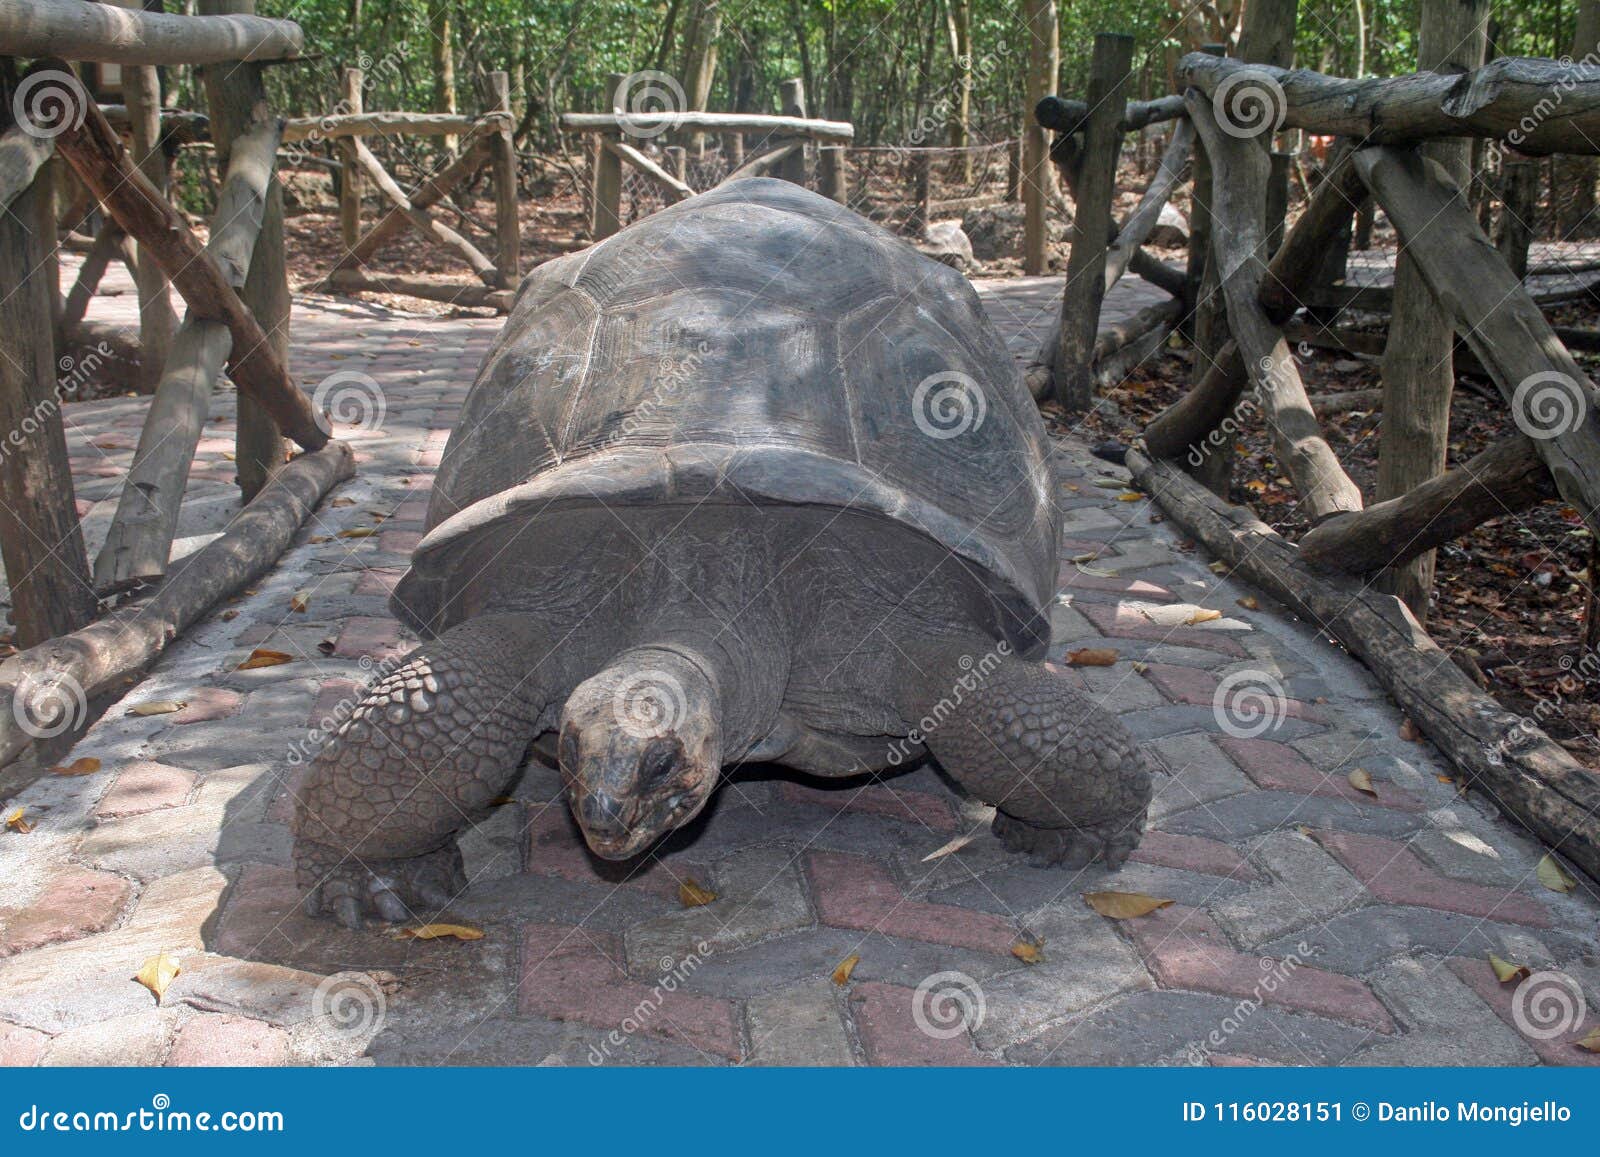 zanzibar turtle